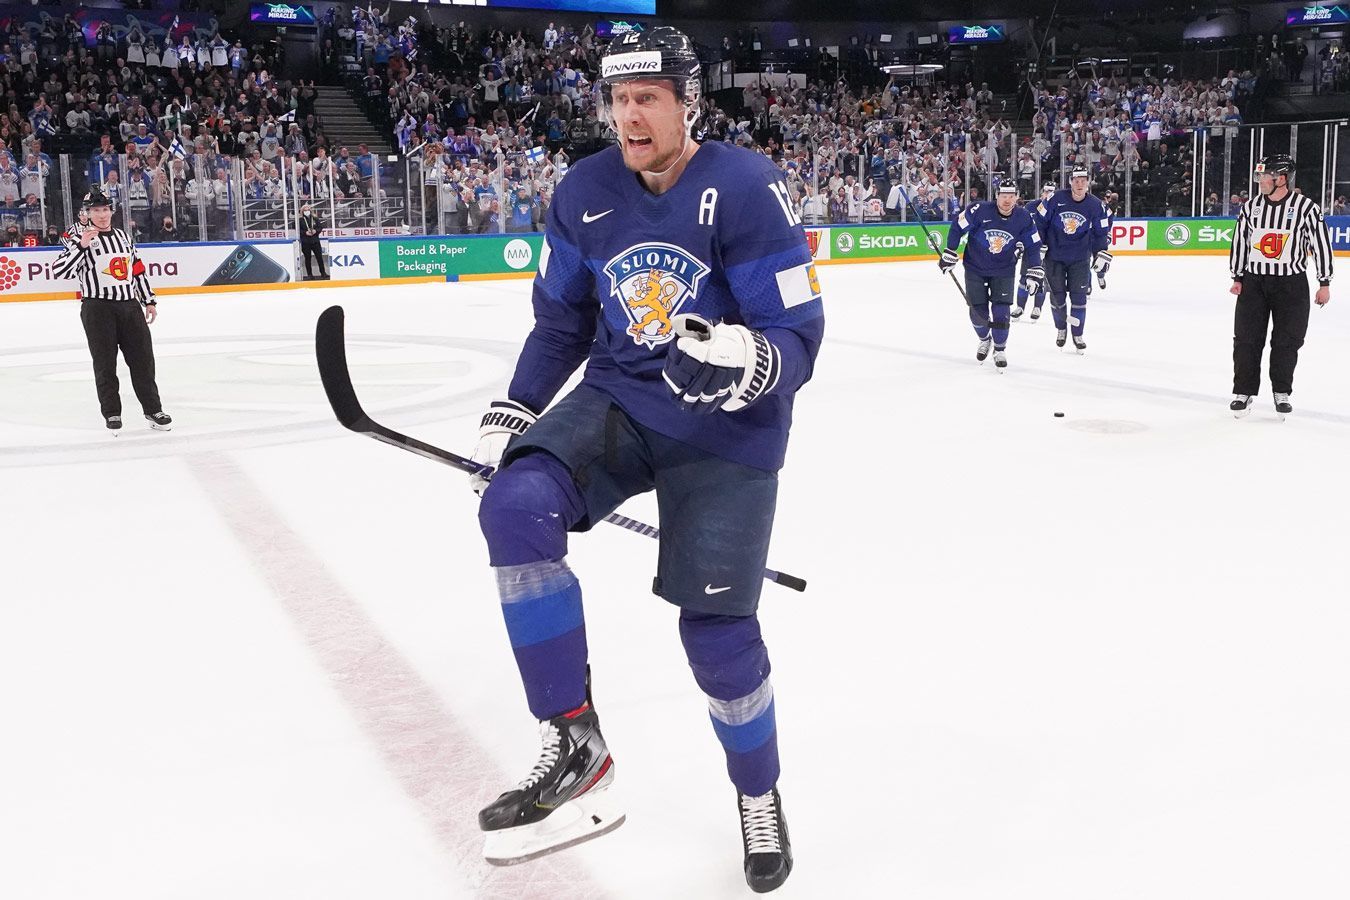 Финляндия — Канада прогноз на матч 29 мая на ЧМ-2022 по хоккею: ставки и коэффициенты на игру